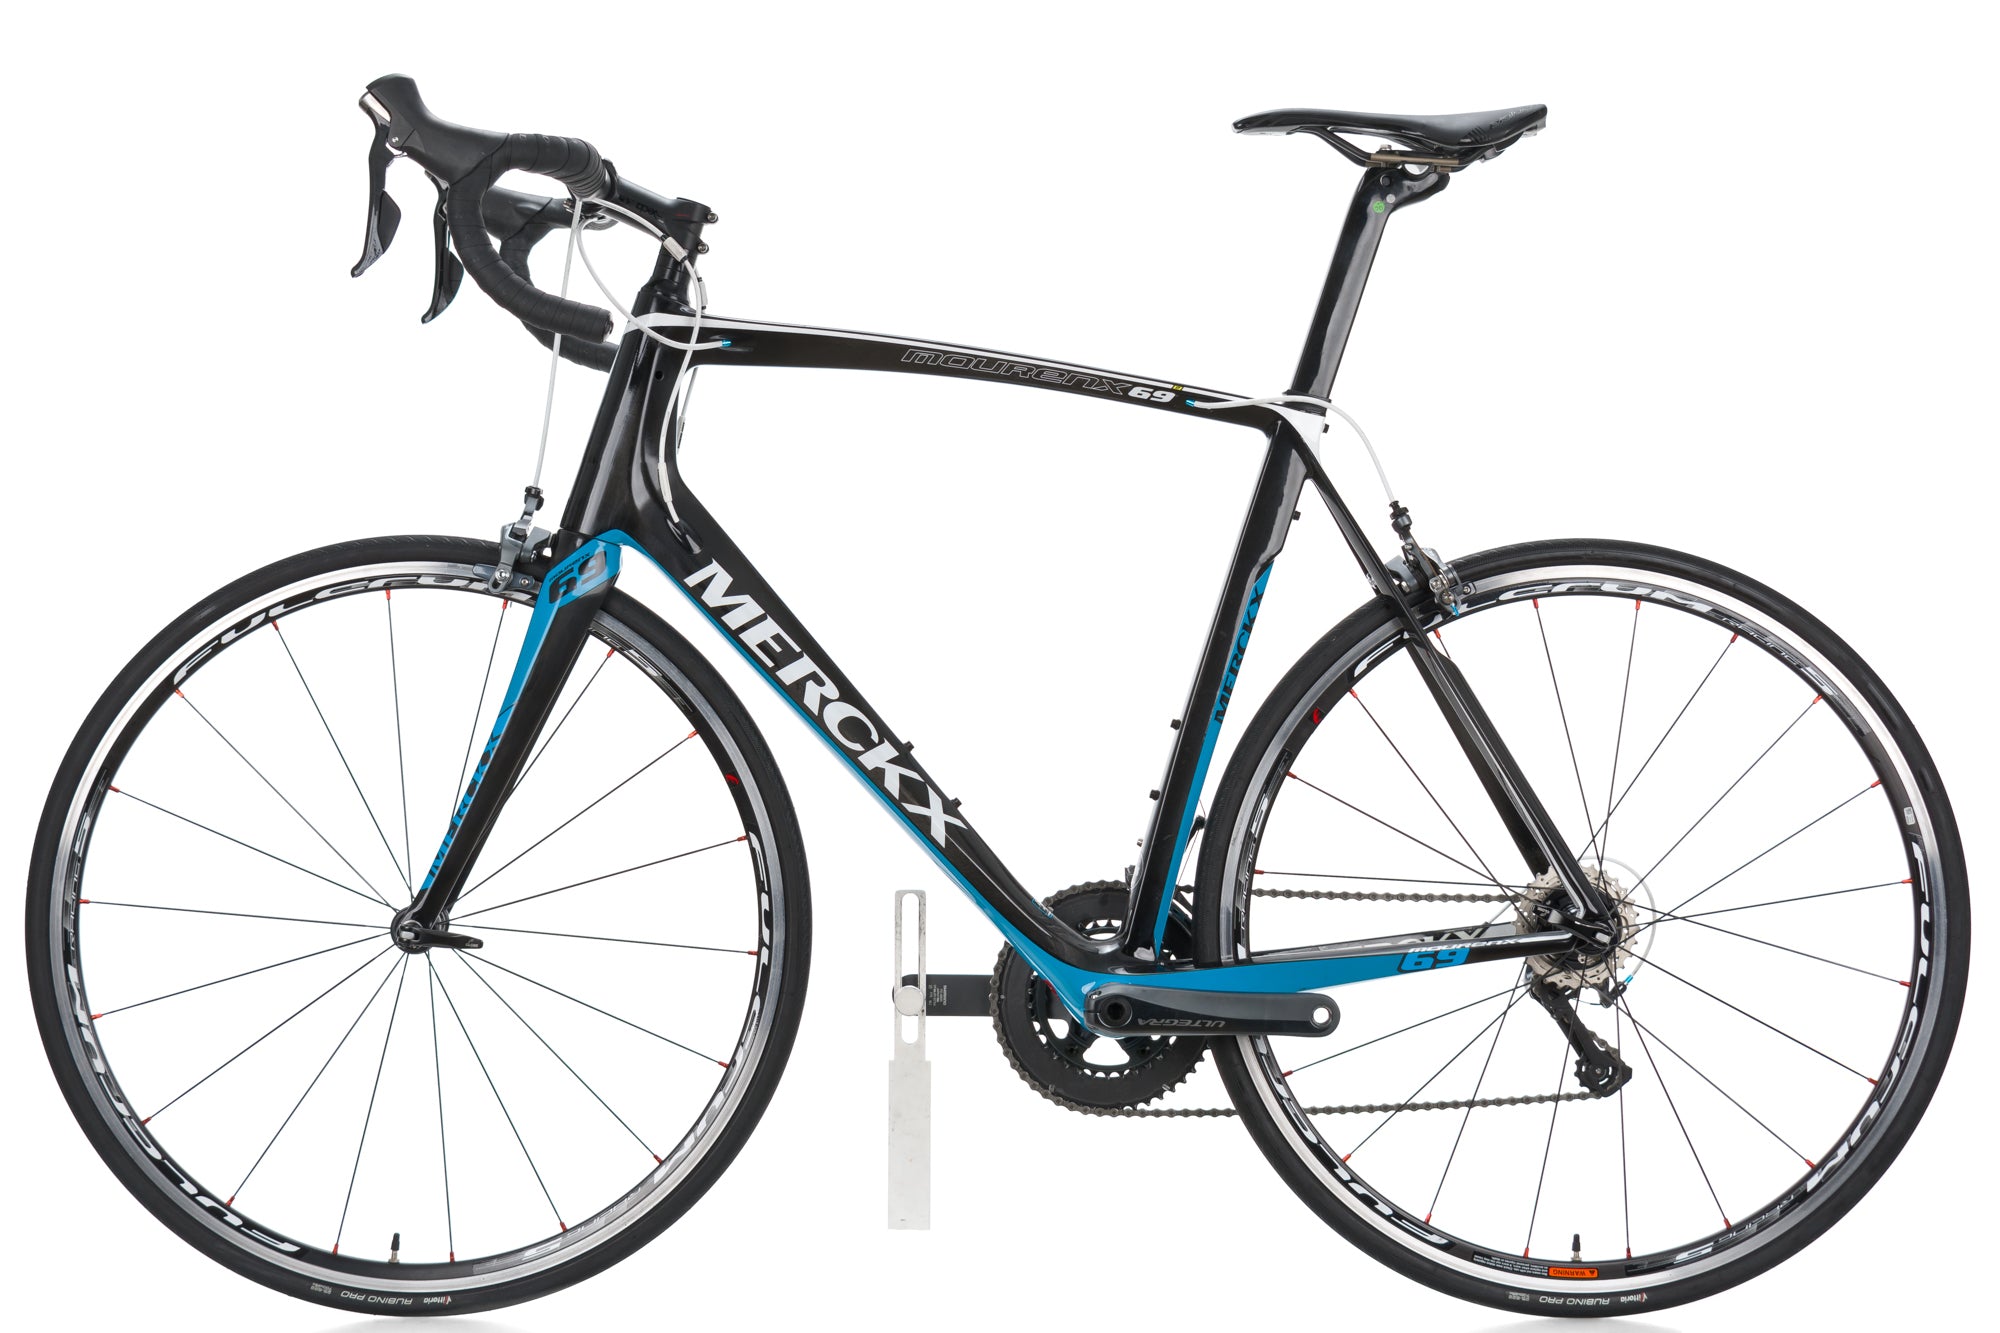 2015 Eddy Merckx Mourenx 69 Carbon Road Bike 54cm / 60cm XL Shimano Ultegra 11s non-drive side